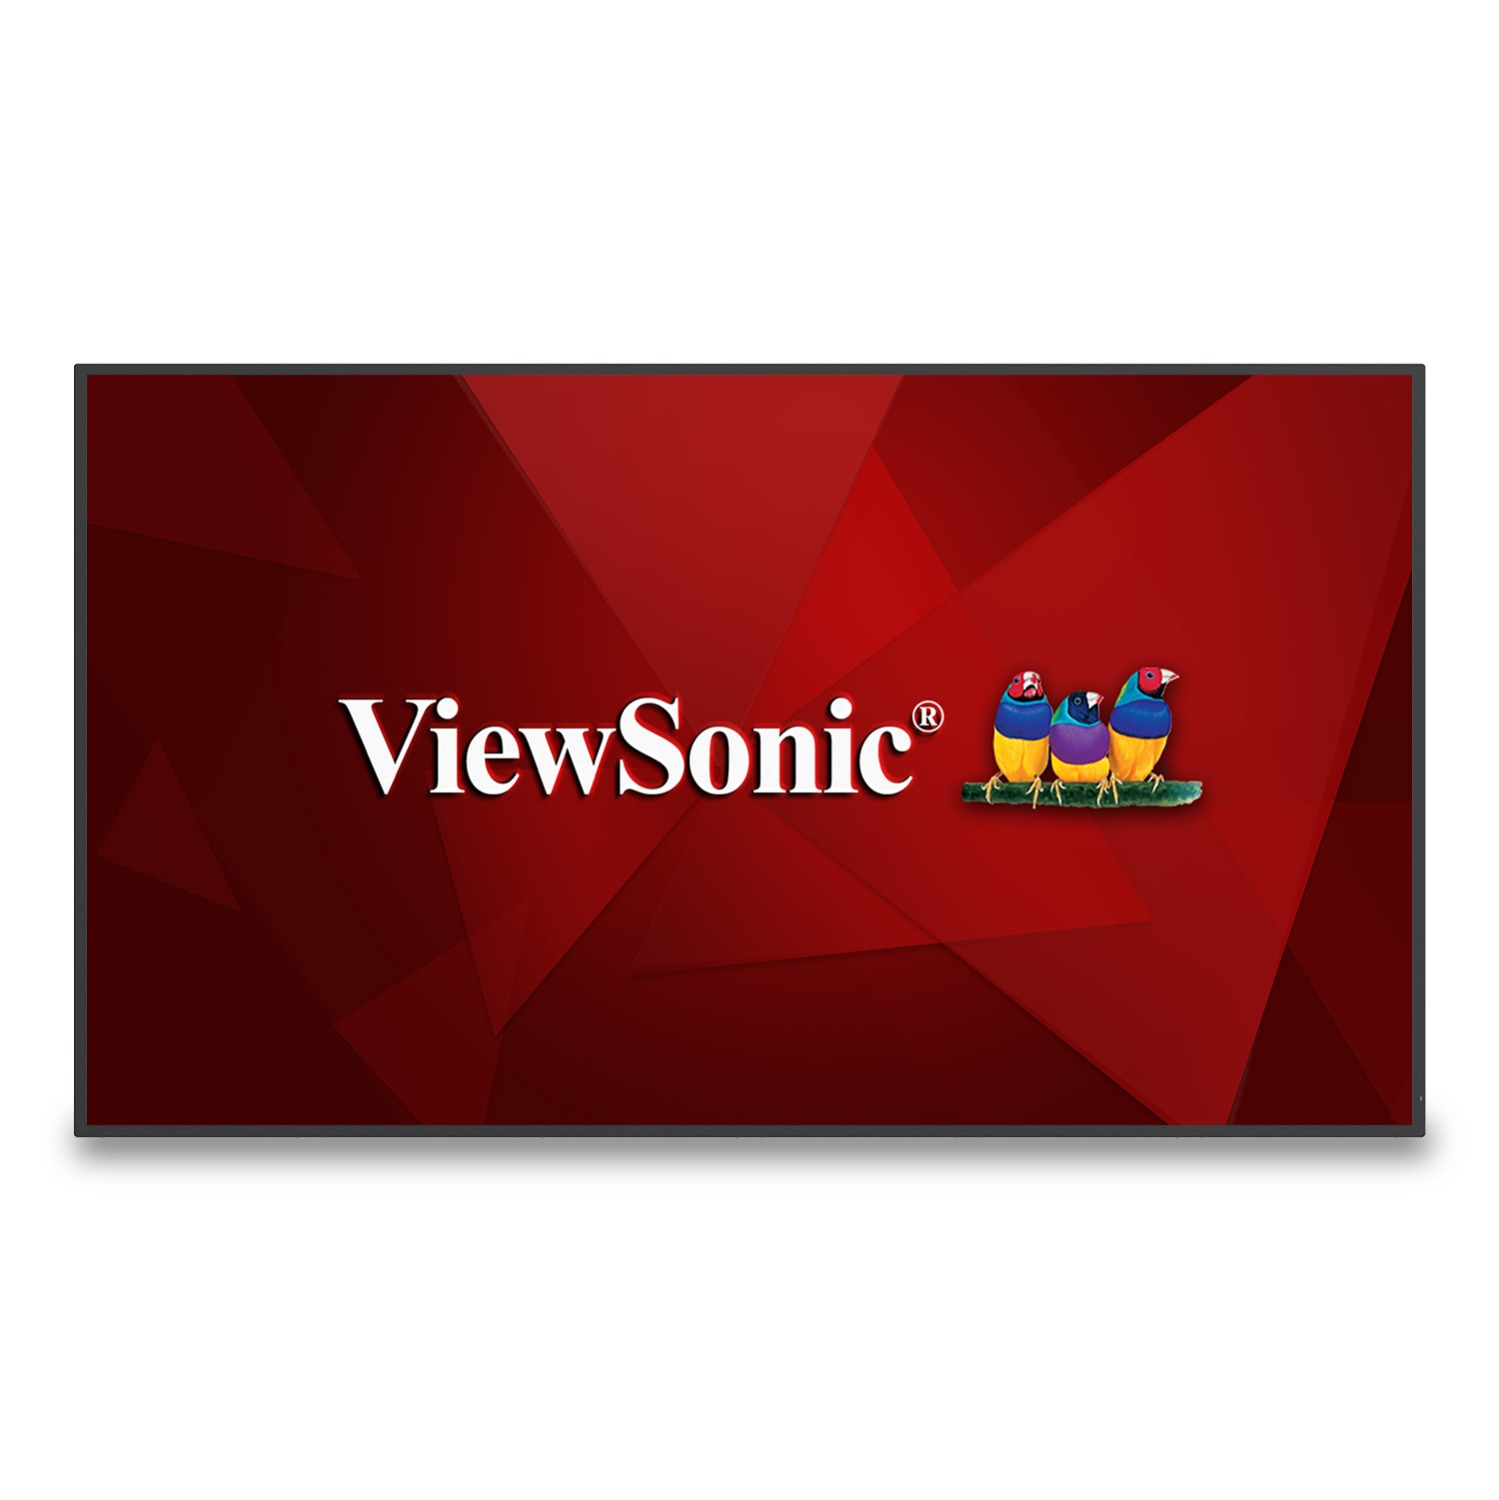 ViewSonic CDE6530 - 165.1 cm (65") Diagonalklasse CDE30 Series LCD-Display mit LED-Hintergrundbeleuchtung - Digital Signage - Android - 4K UHD (2160p)